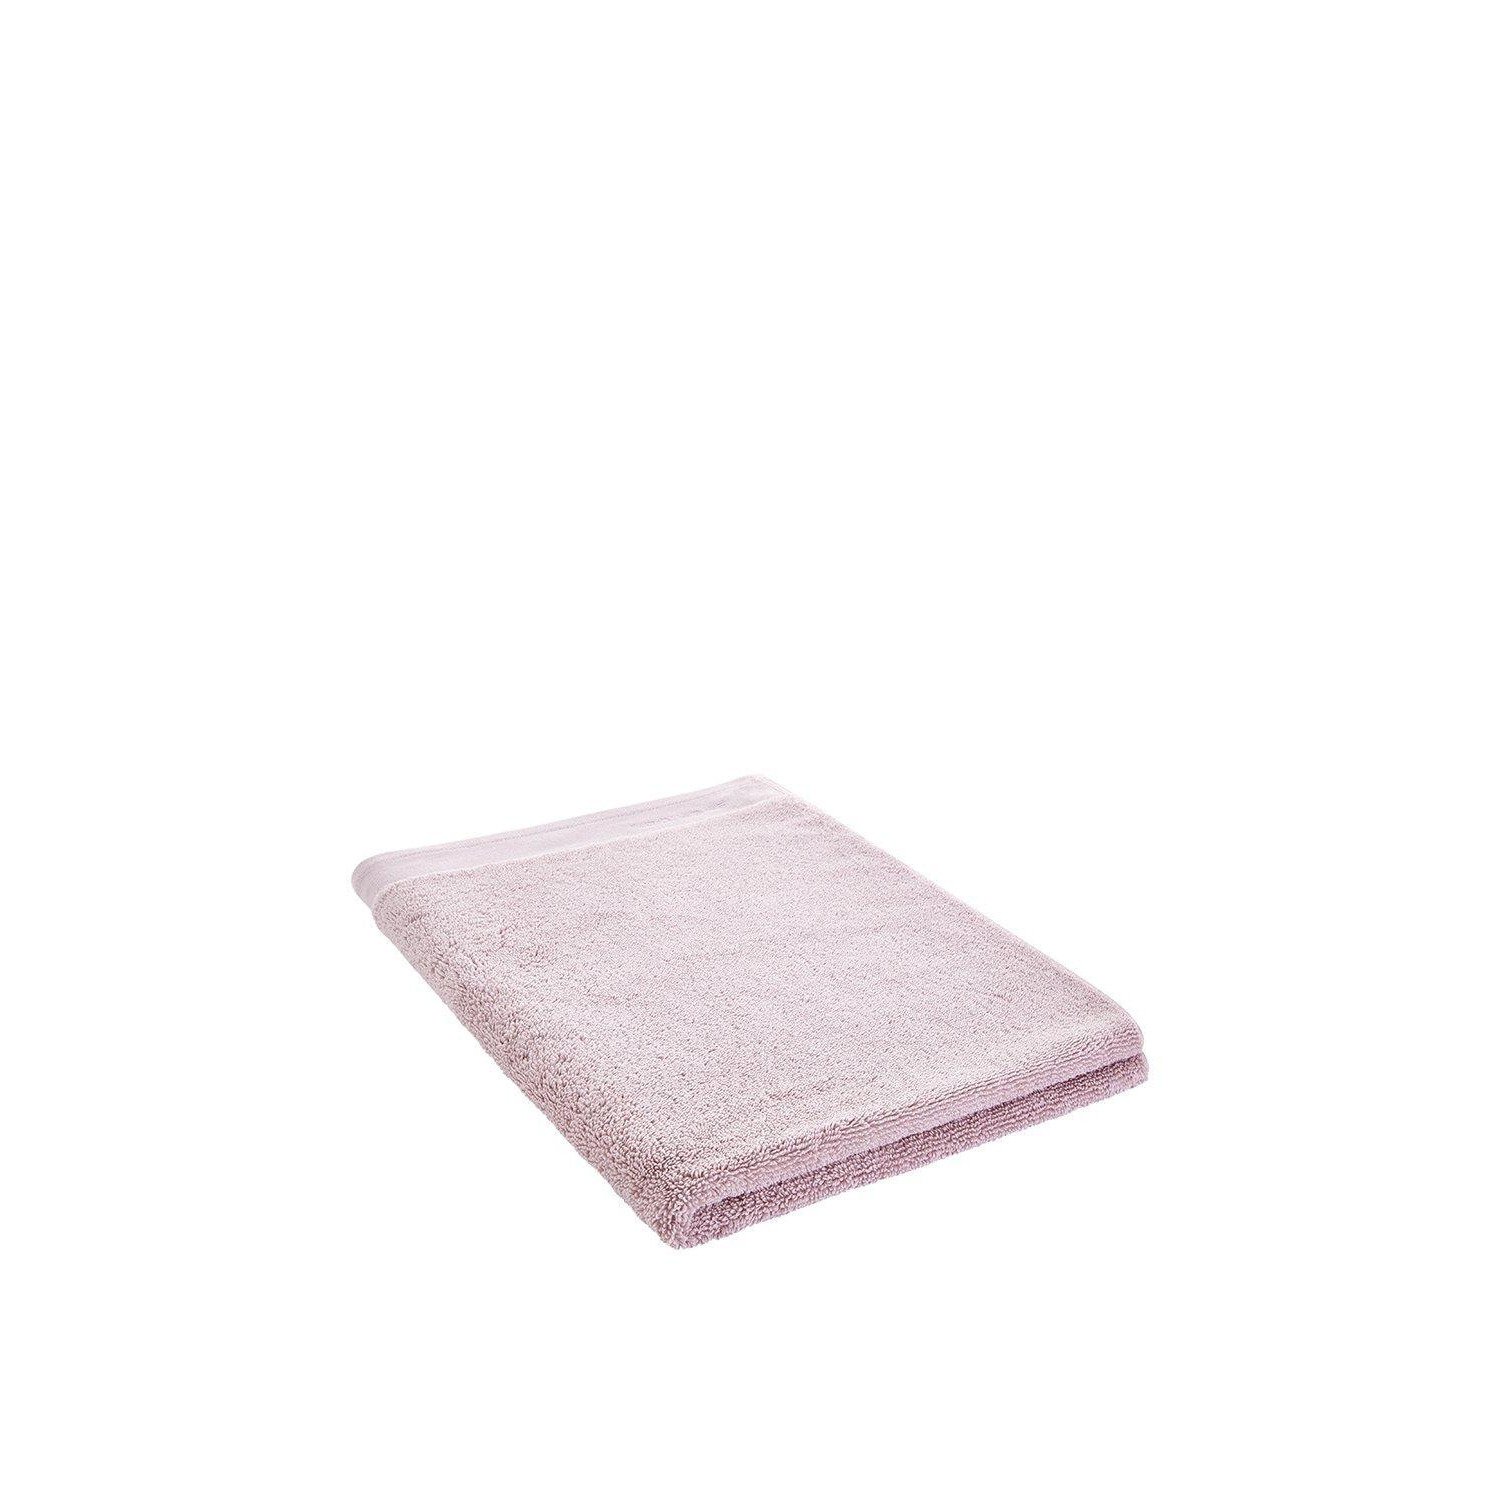 Luxury Retreat Cotton Bath Mat - image 1